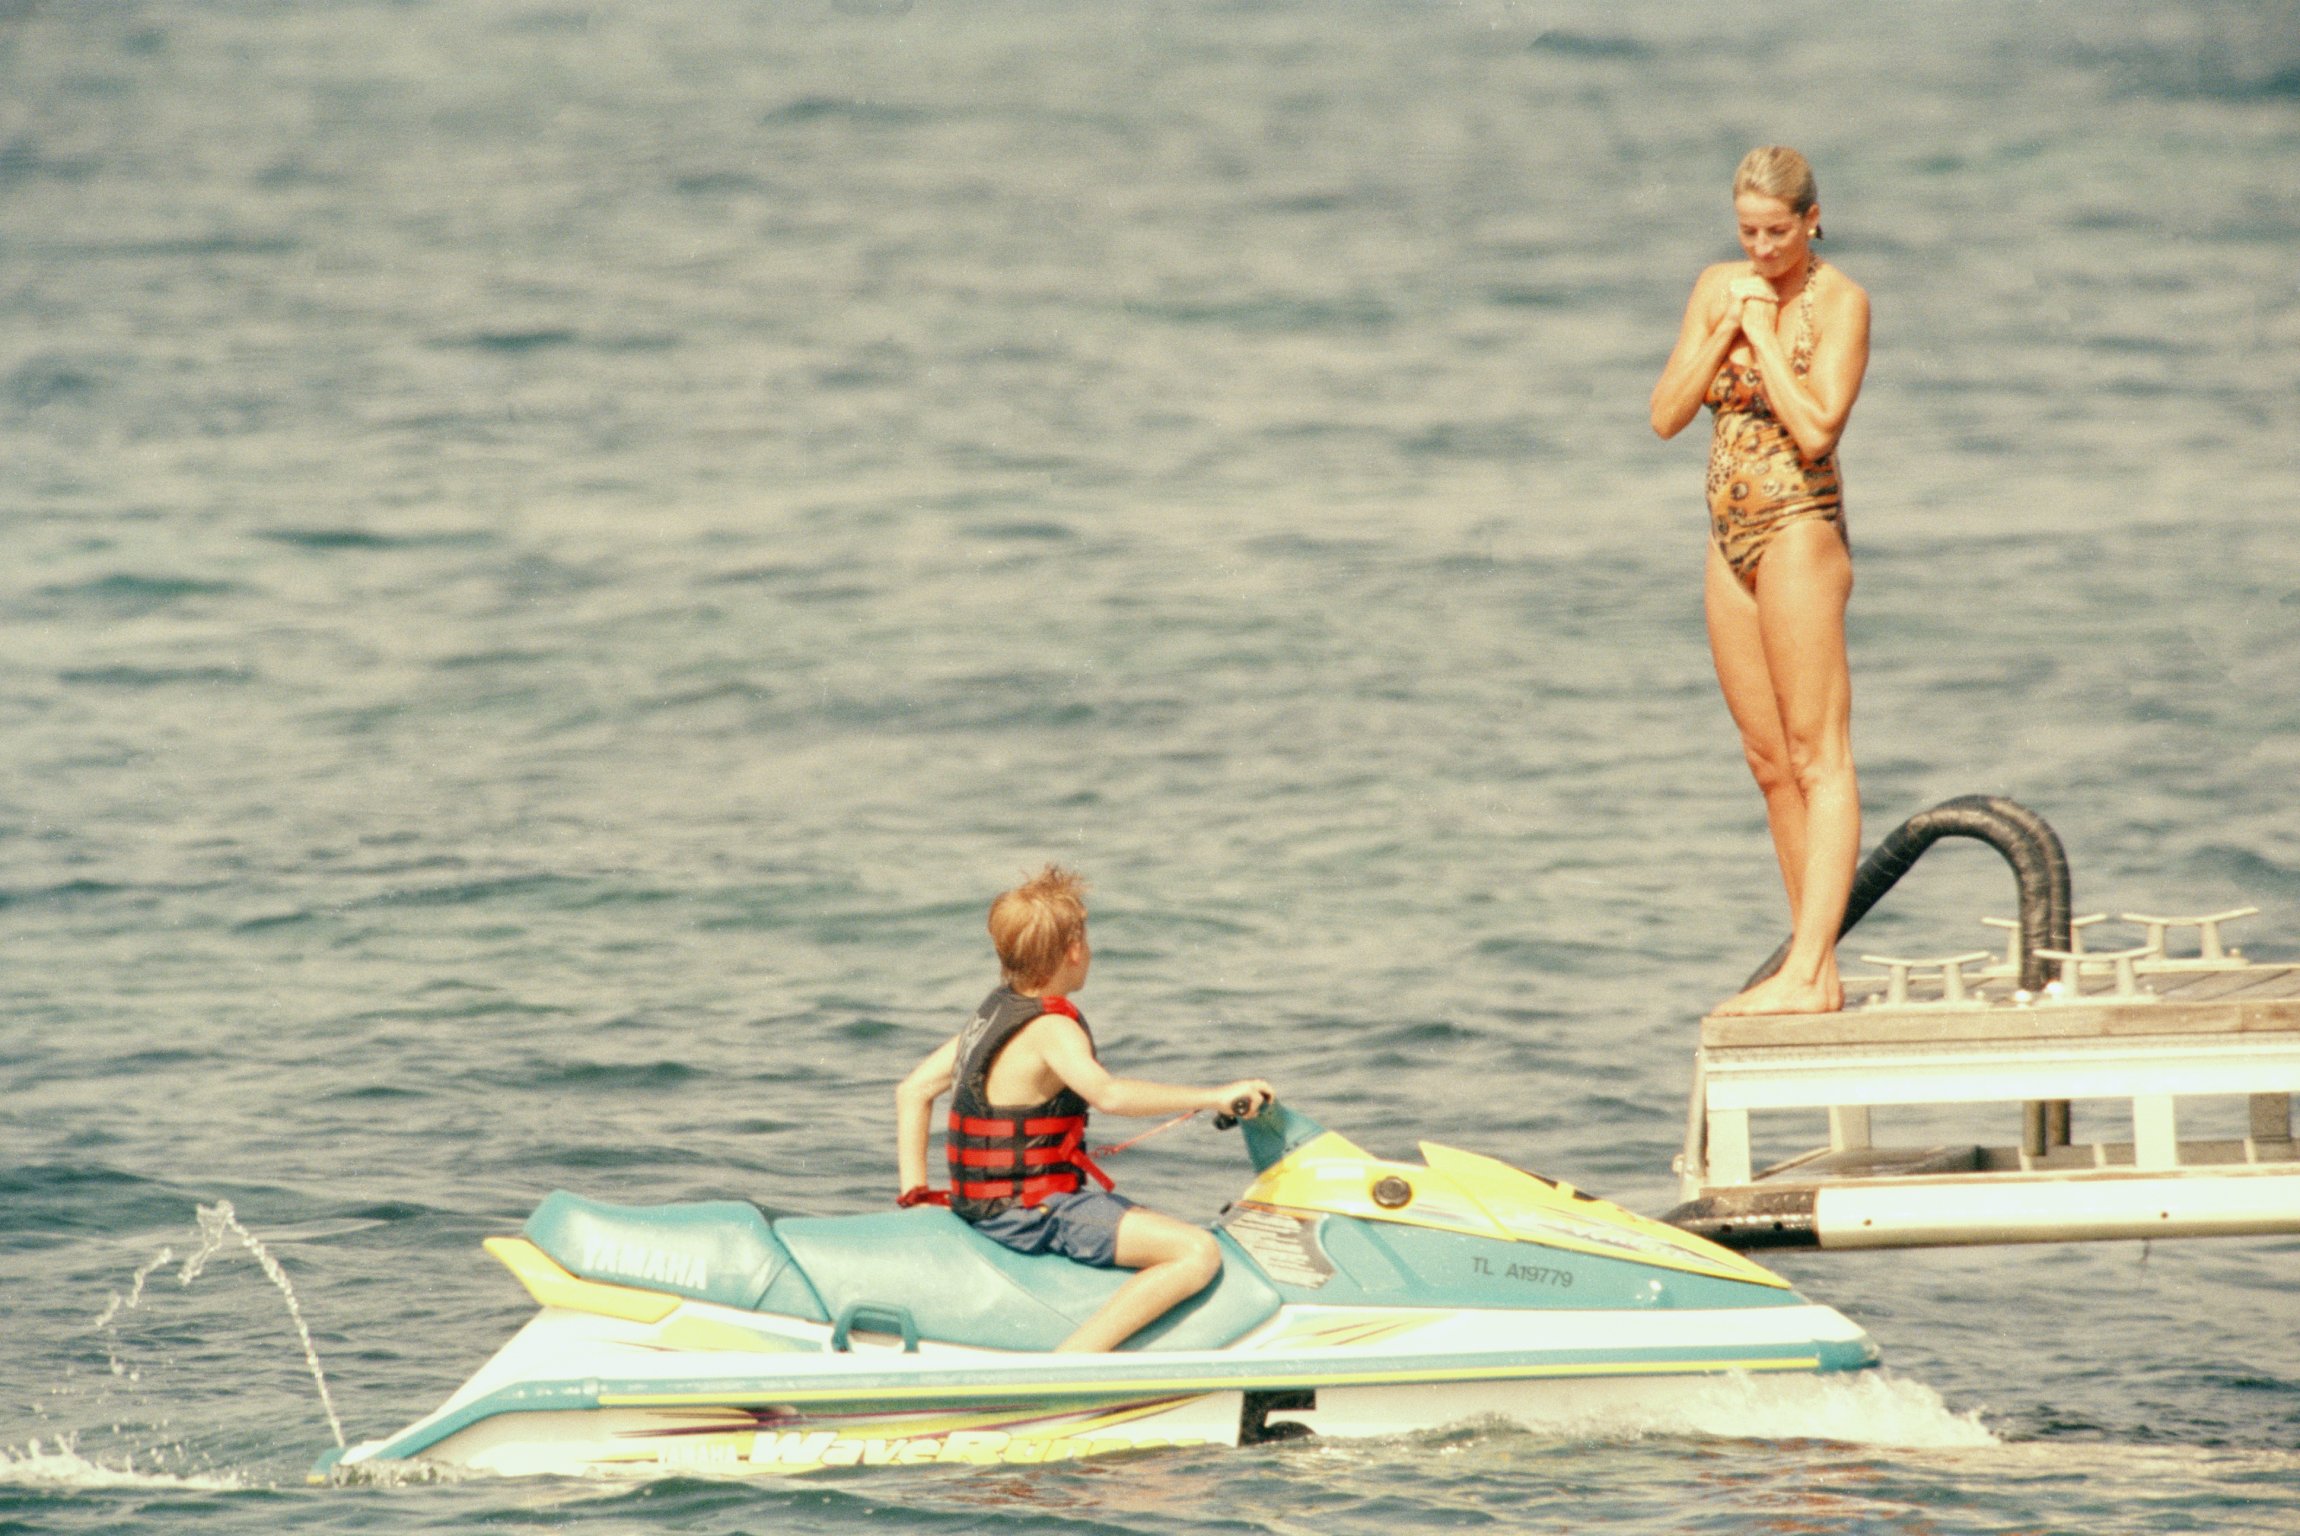 Diana hercegnő és Harry strandol